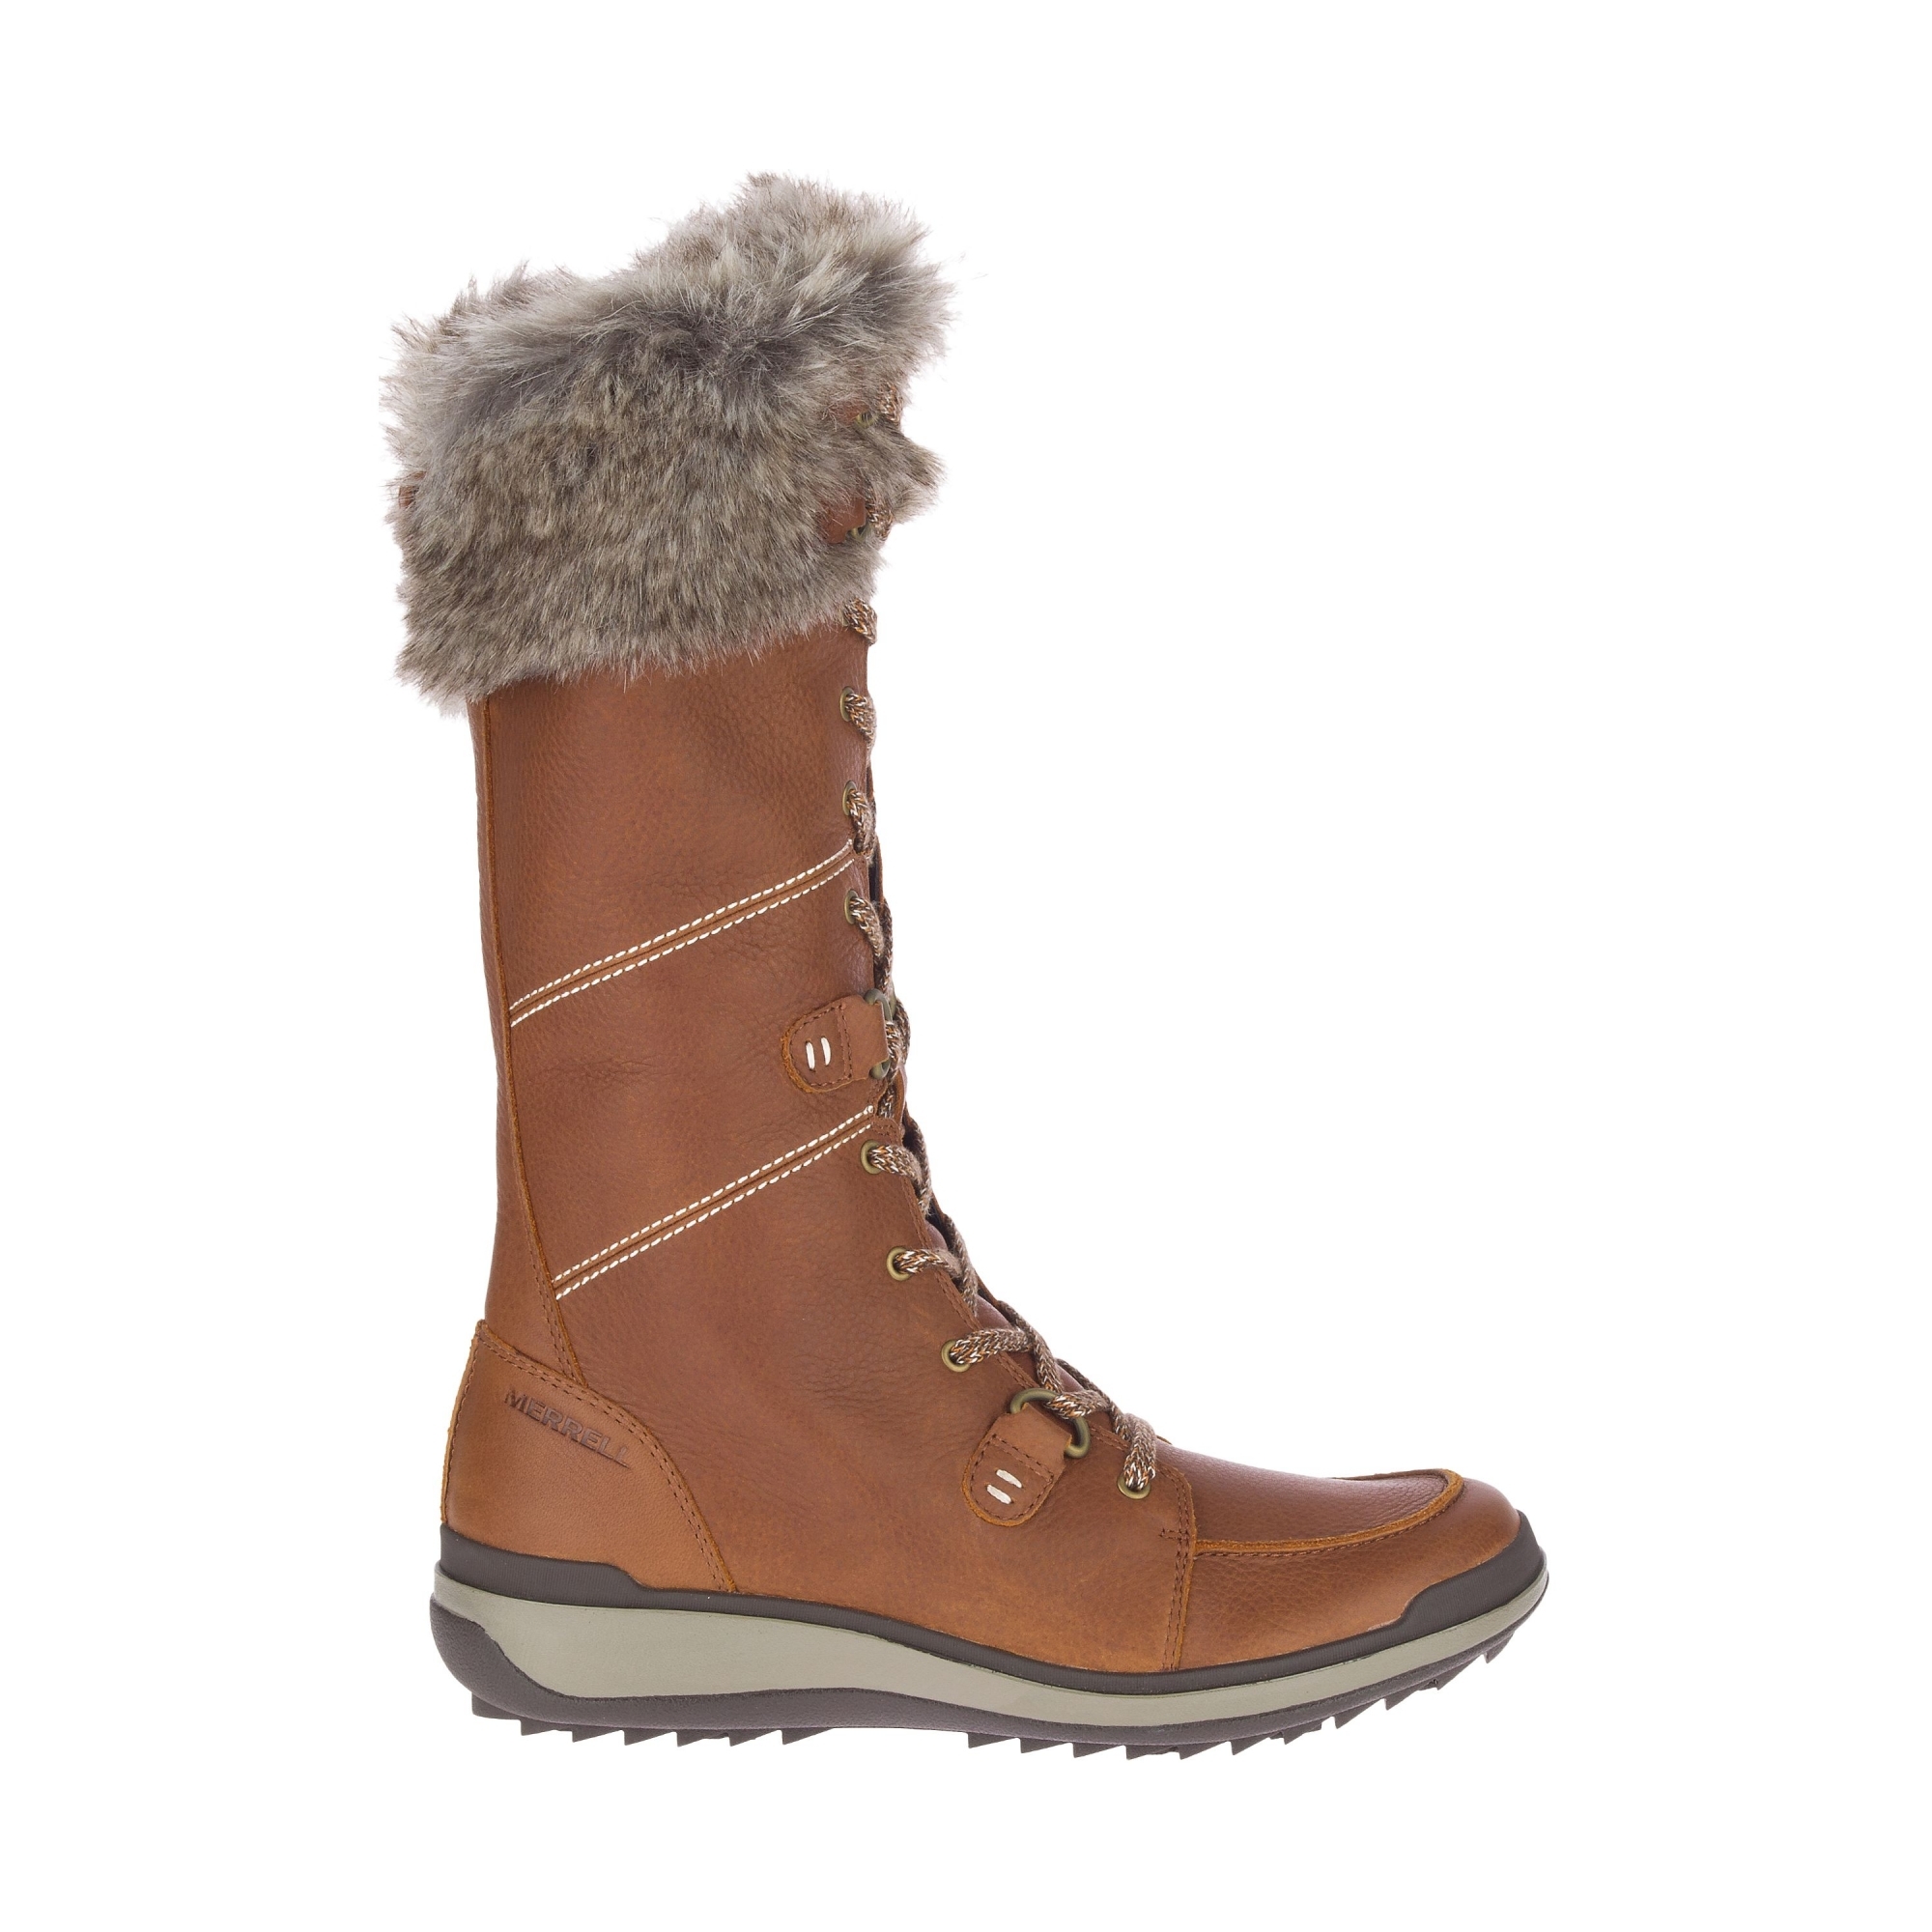 Merrell Ladies Snowcreek Cozy Leather Polar Waterproof Winter Boots